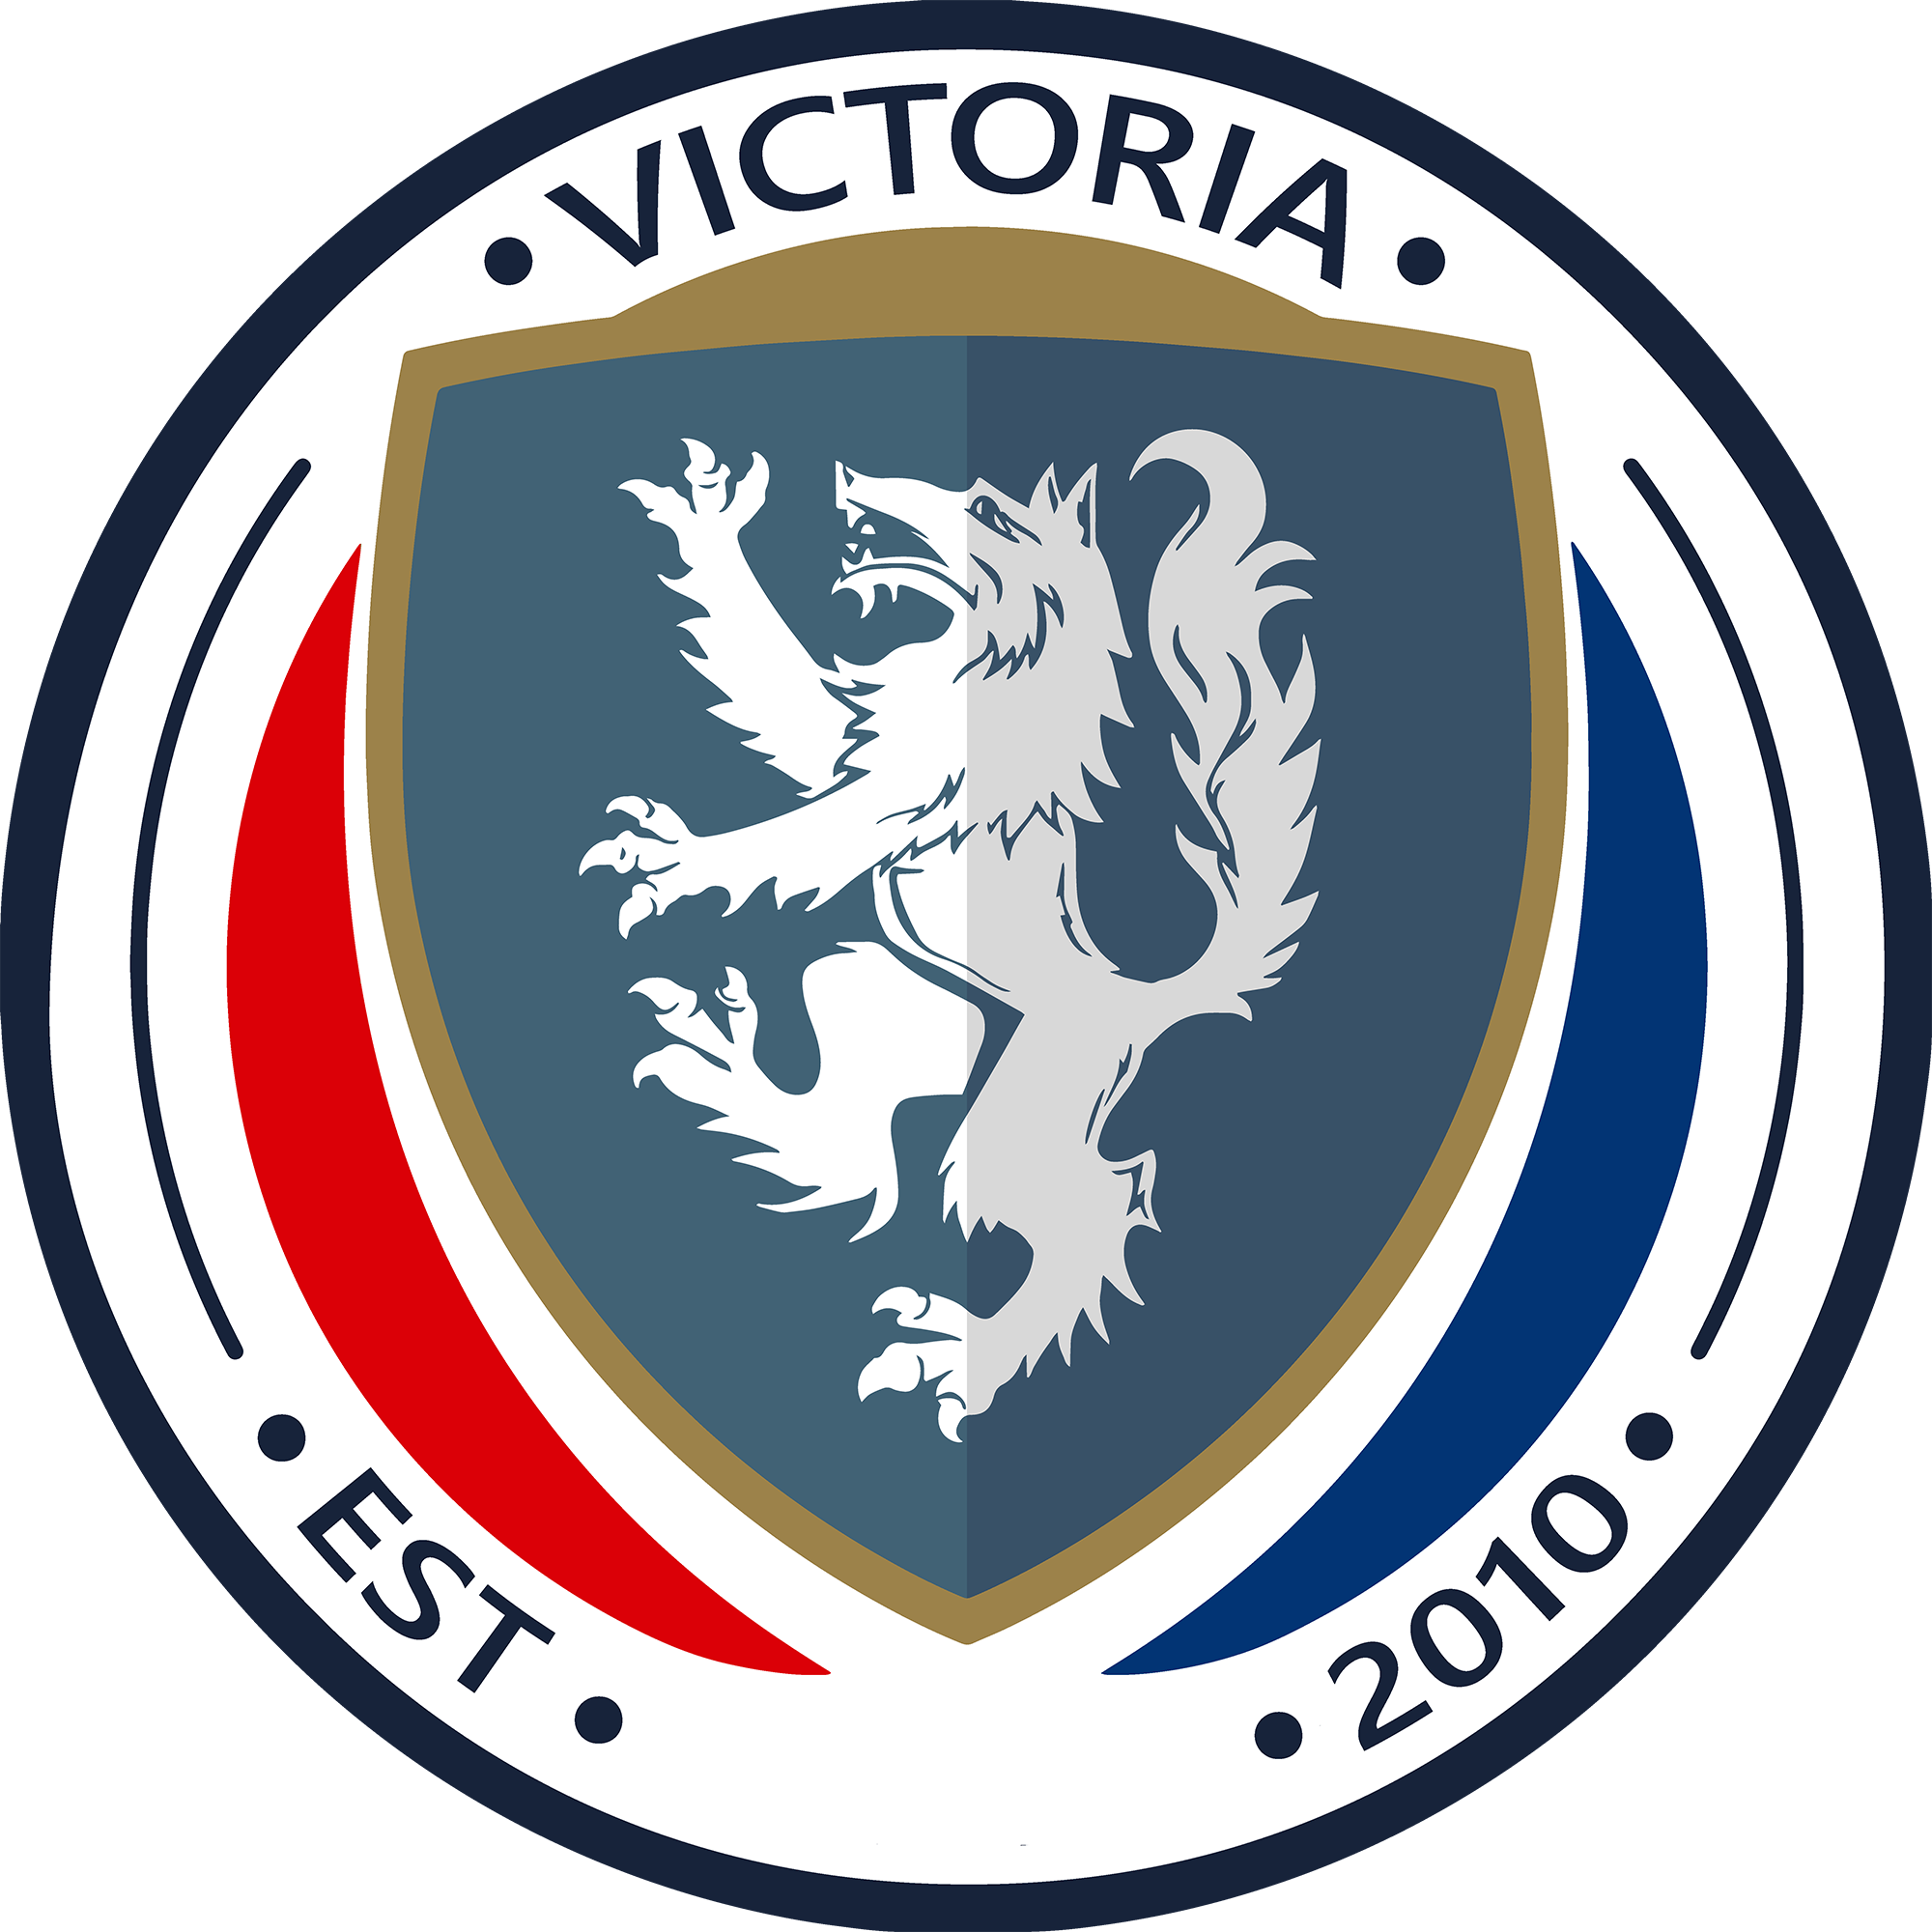 File:Victoria national football team logo 2014.png - MicrasWiki